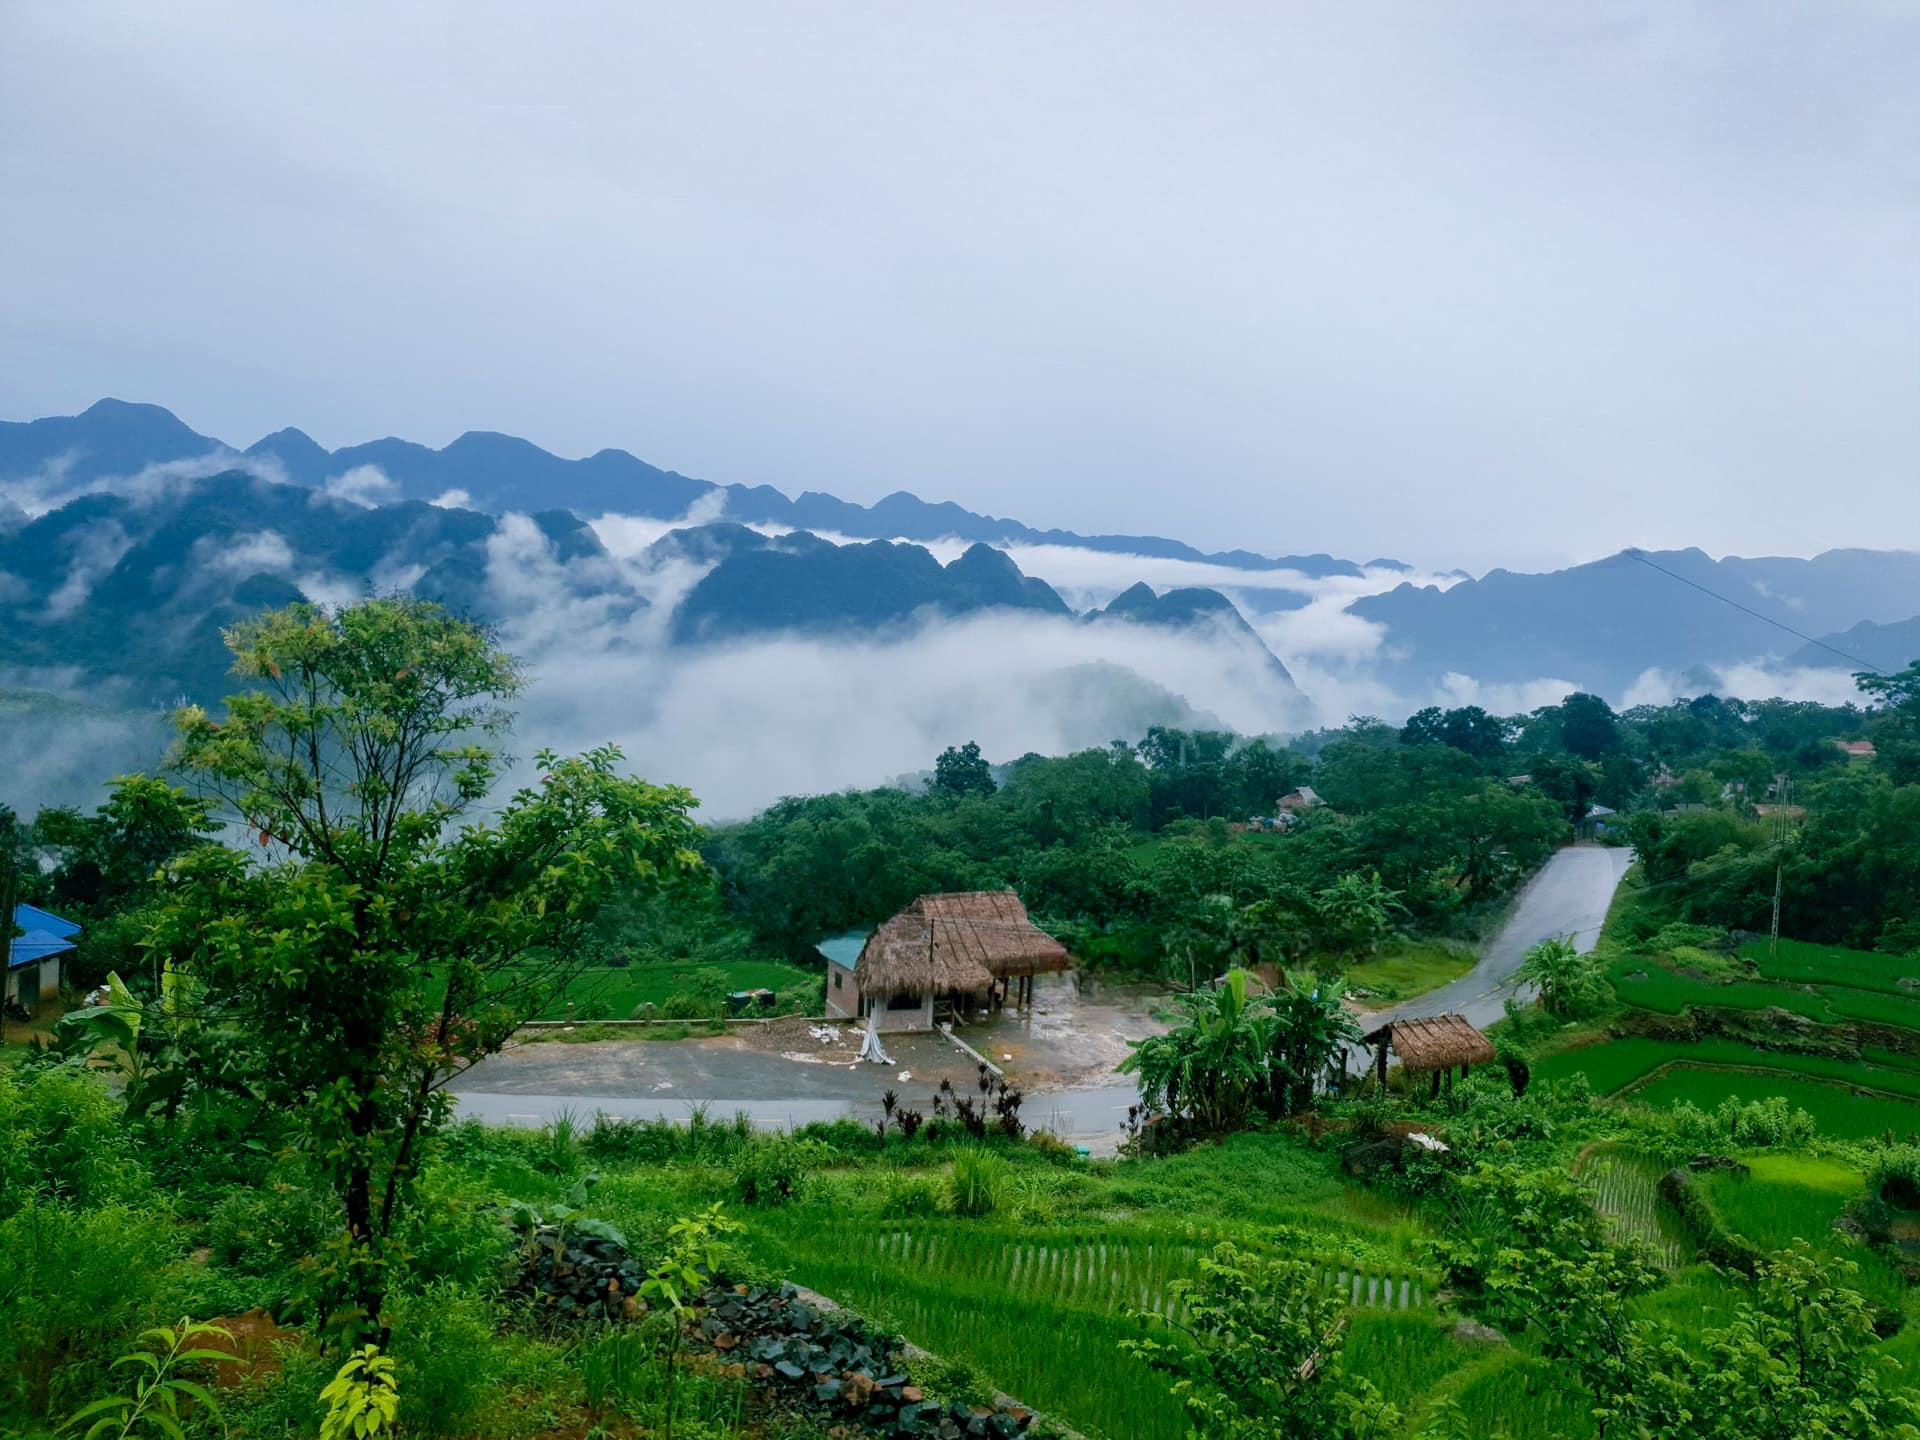 Pu Luong on rainy days - the most beautiful cloud hunting season